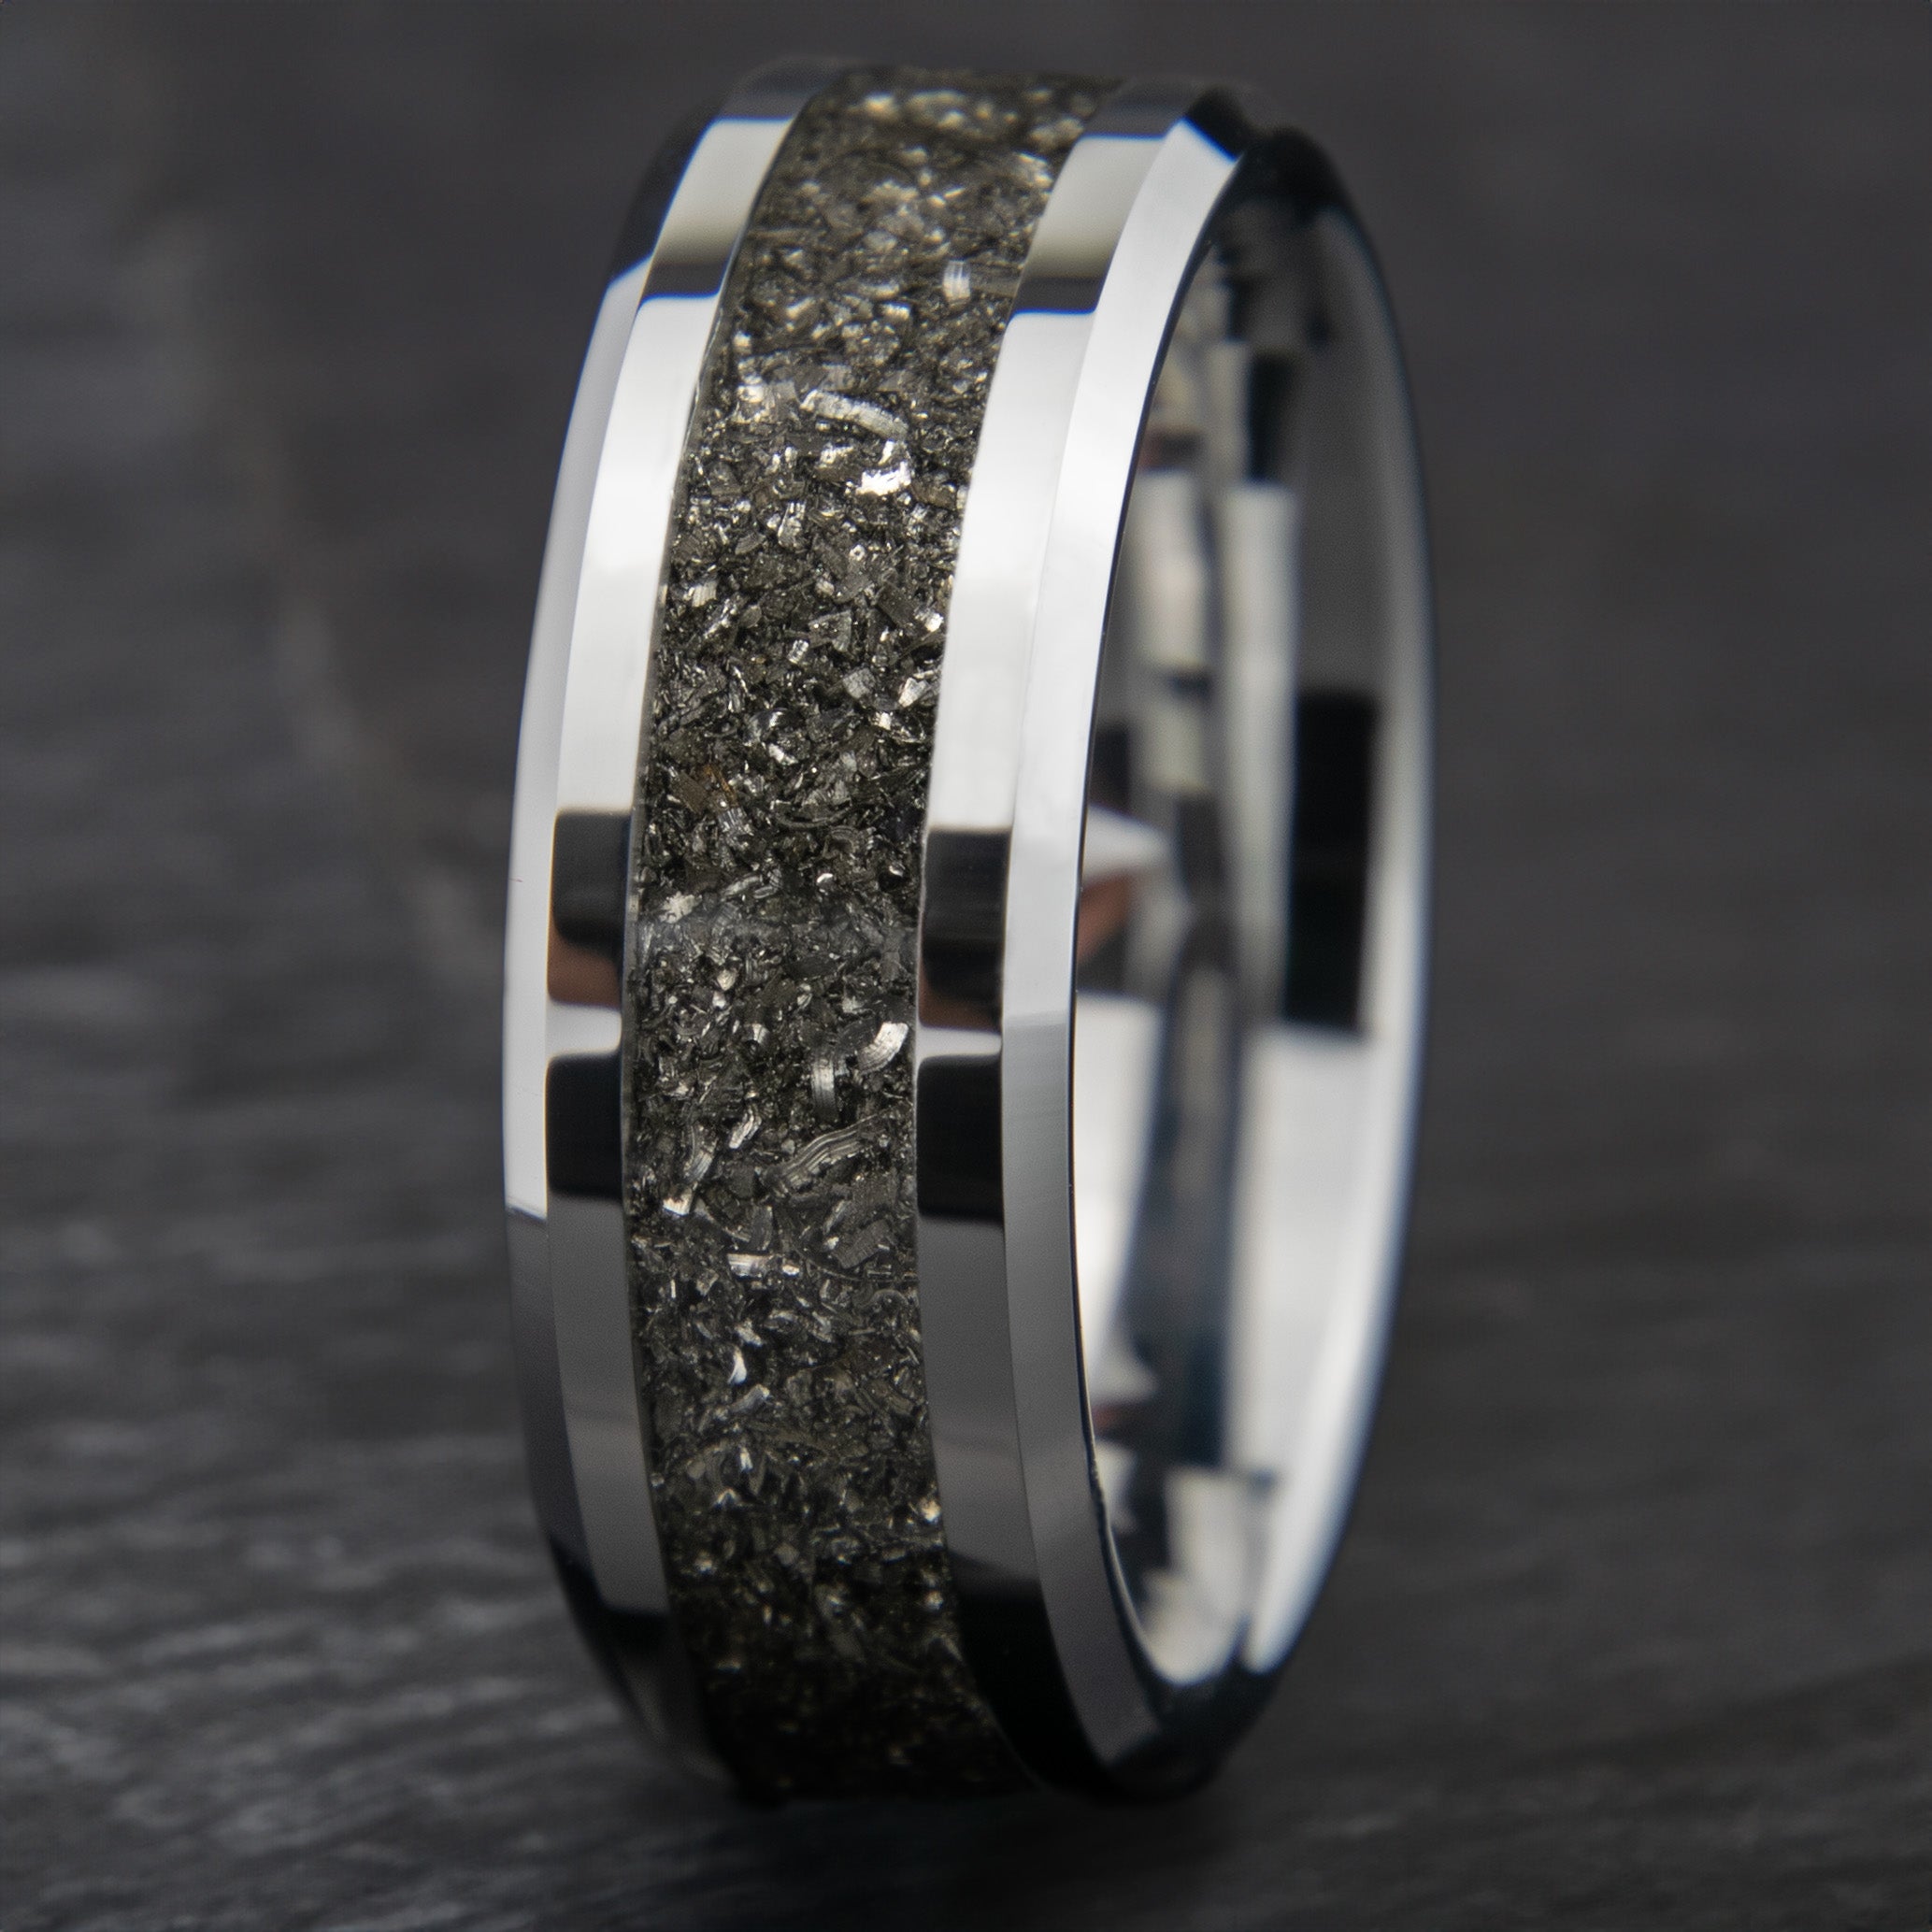 Gibeon Meteorite Ring Tungsten Band Copperbeard Jewelry